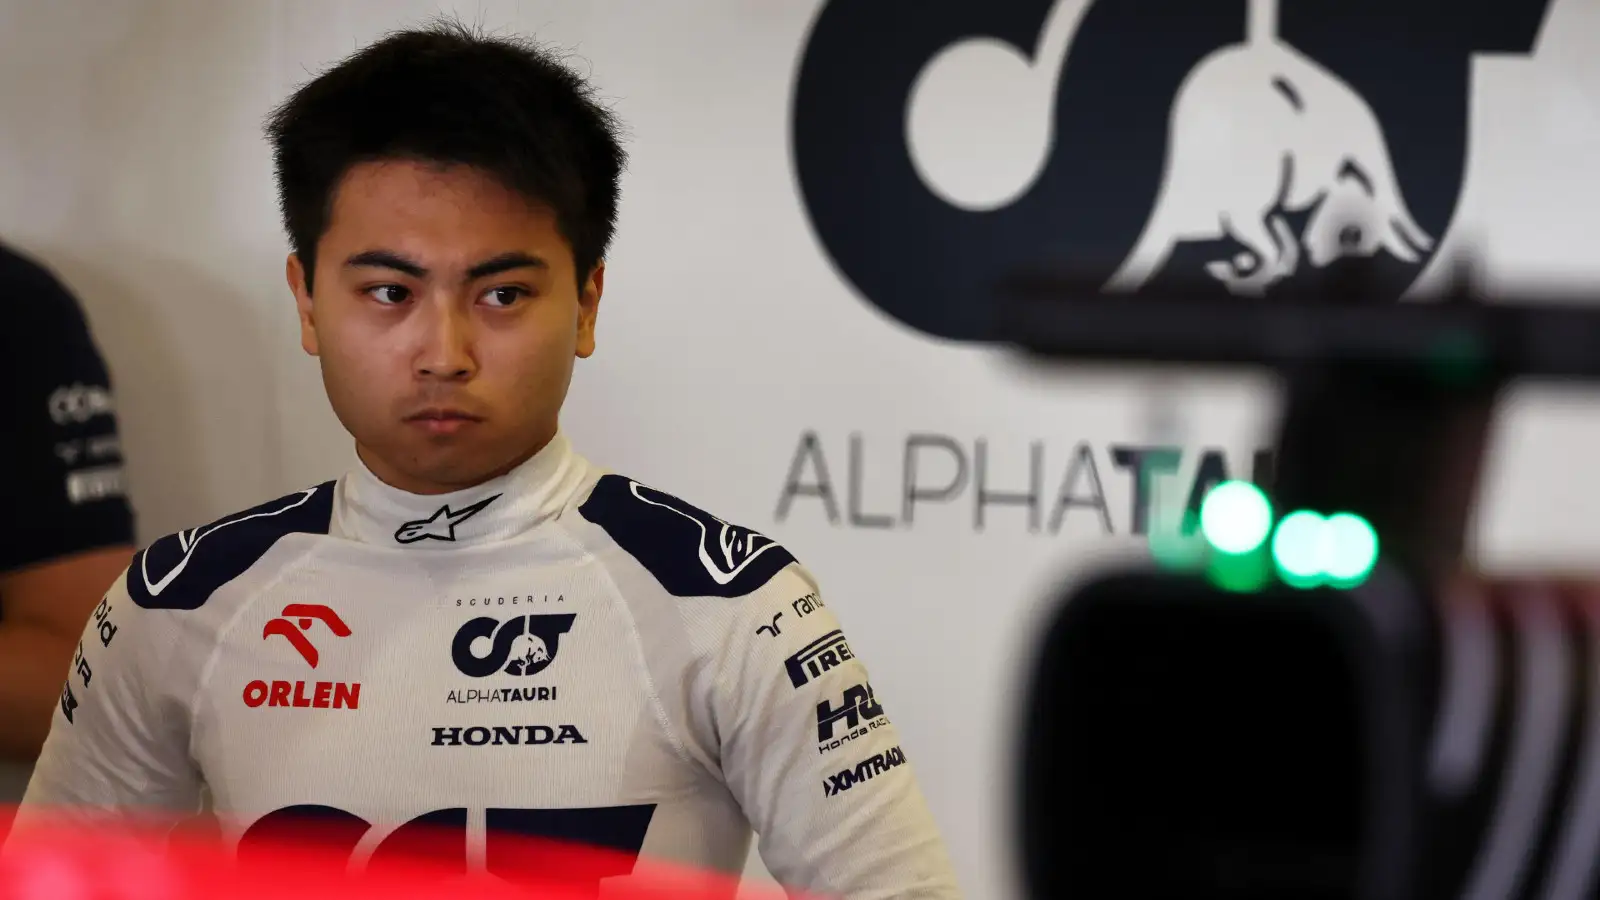 Ayumi Iwasa, Red Bull junior, finished 15th in F1 testing in Abu Dhabi.